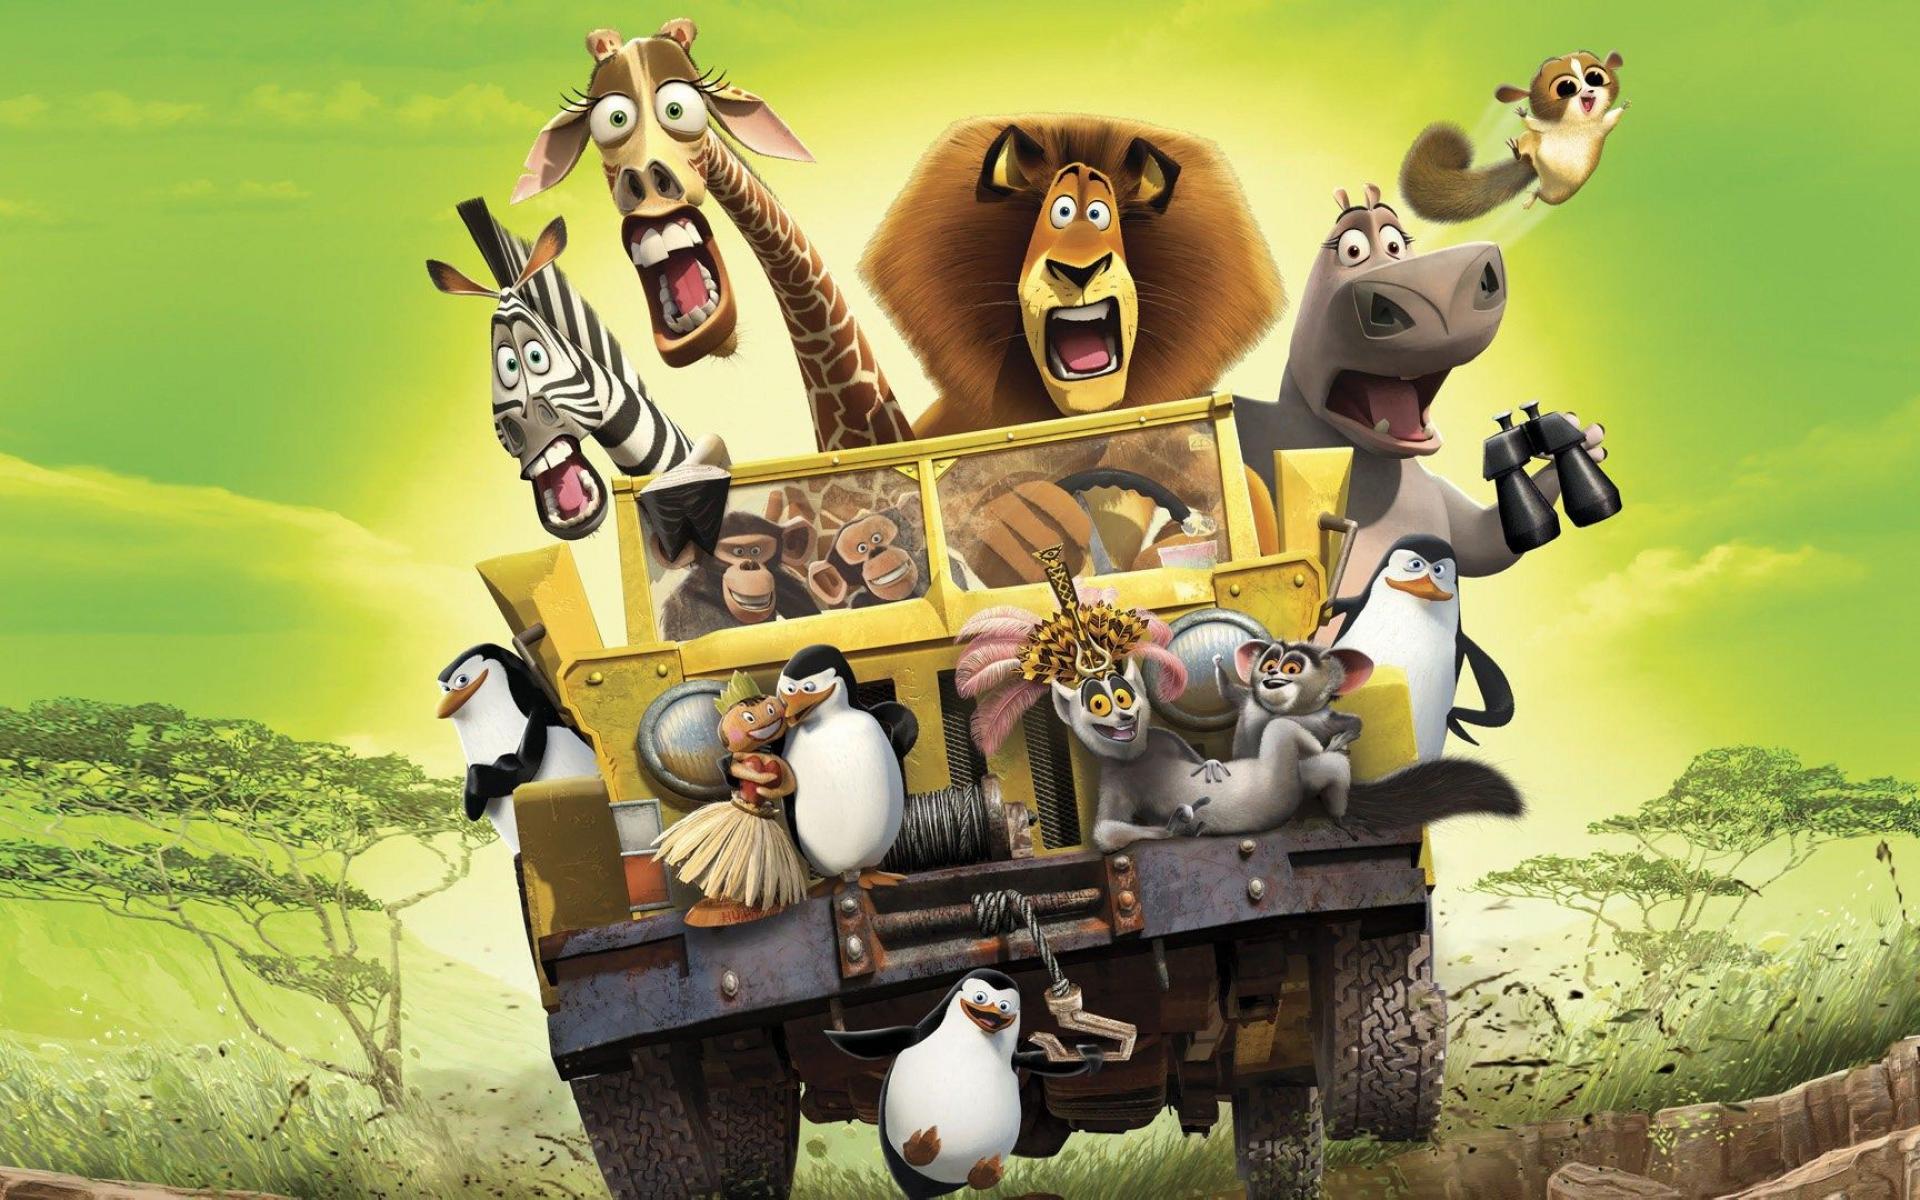 Wallpaper of Madagascar animaton movie in high quality